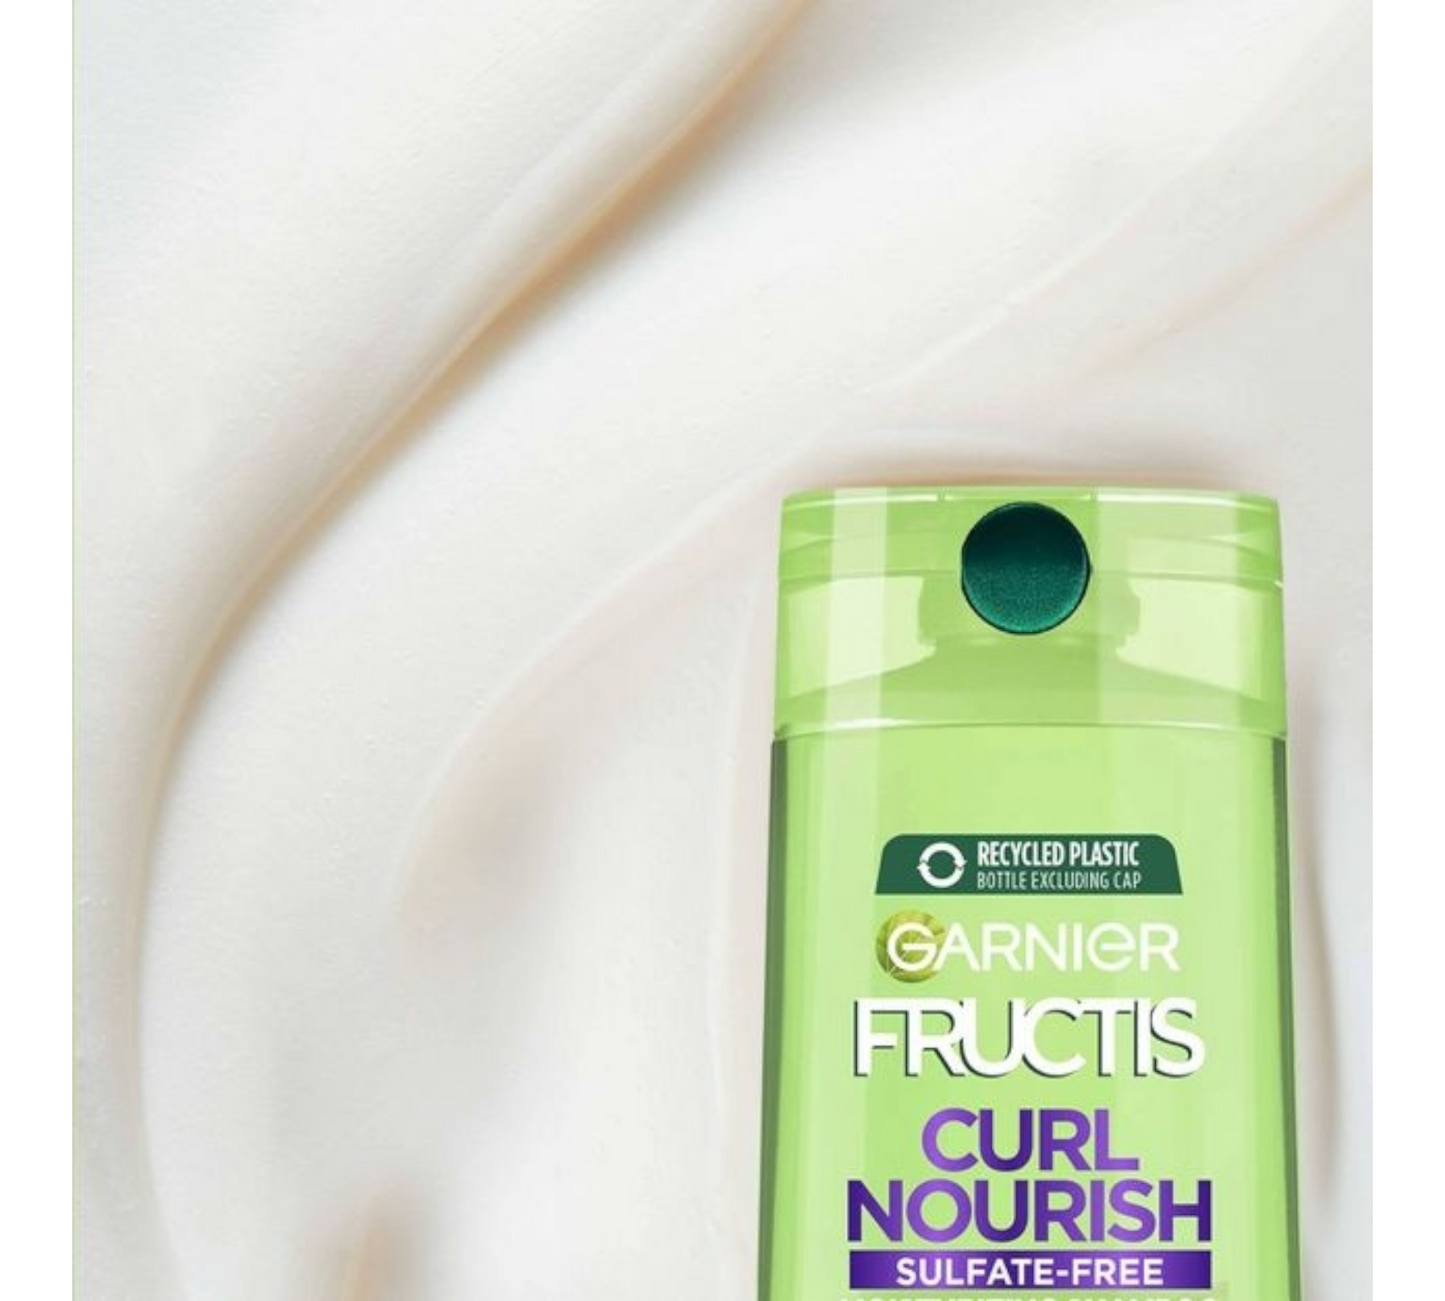 Garnier Fructis Style Cupid Beauty Supplies Shampoo Garnier Fructis Curl Nourish Sulfate-Free Shampoo